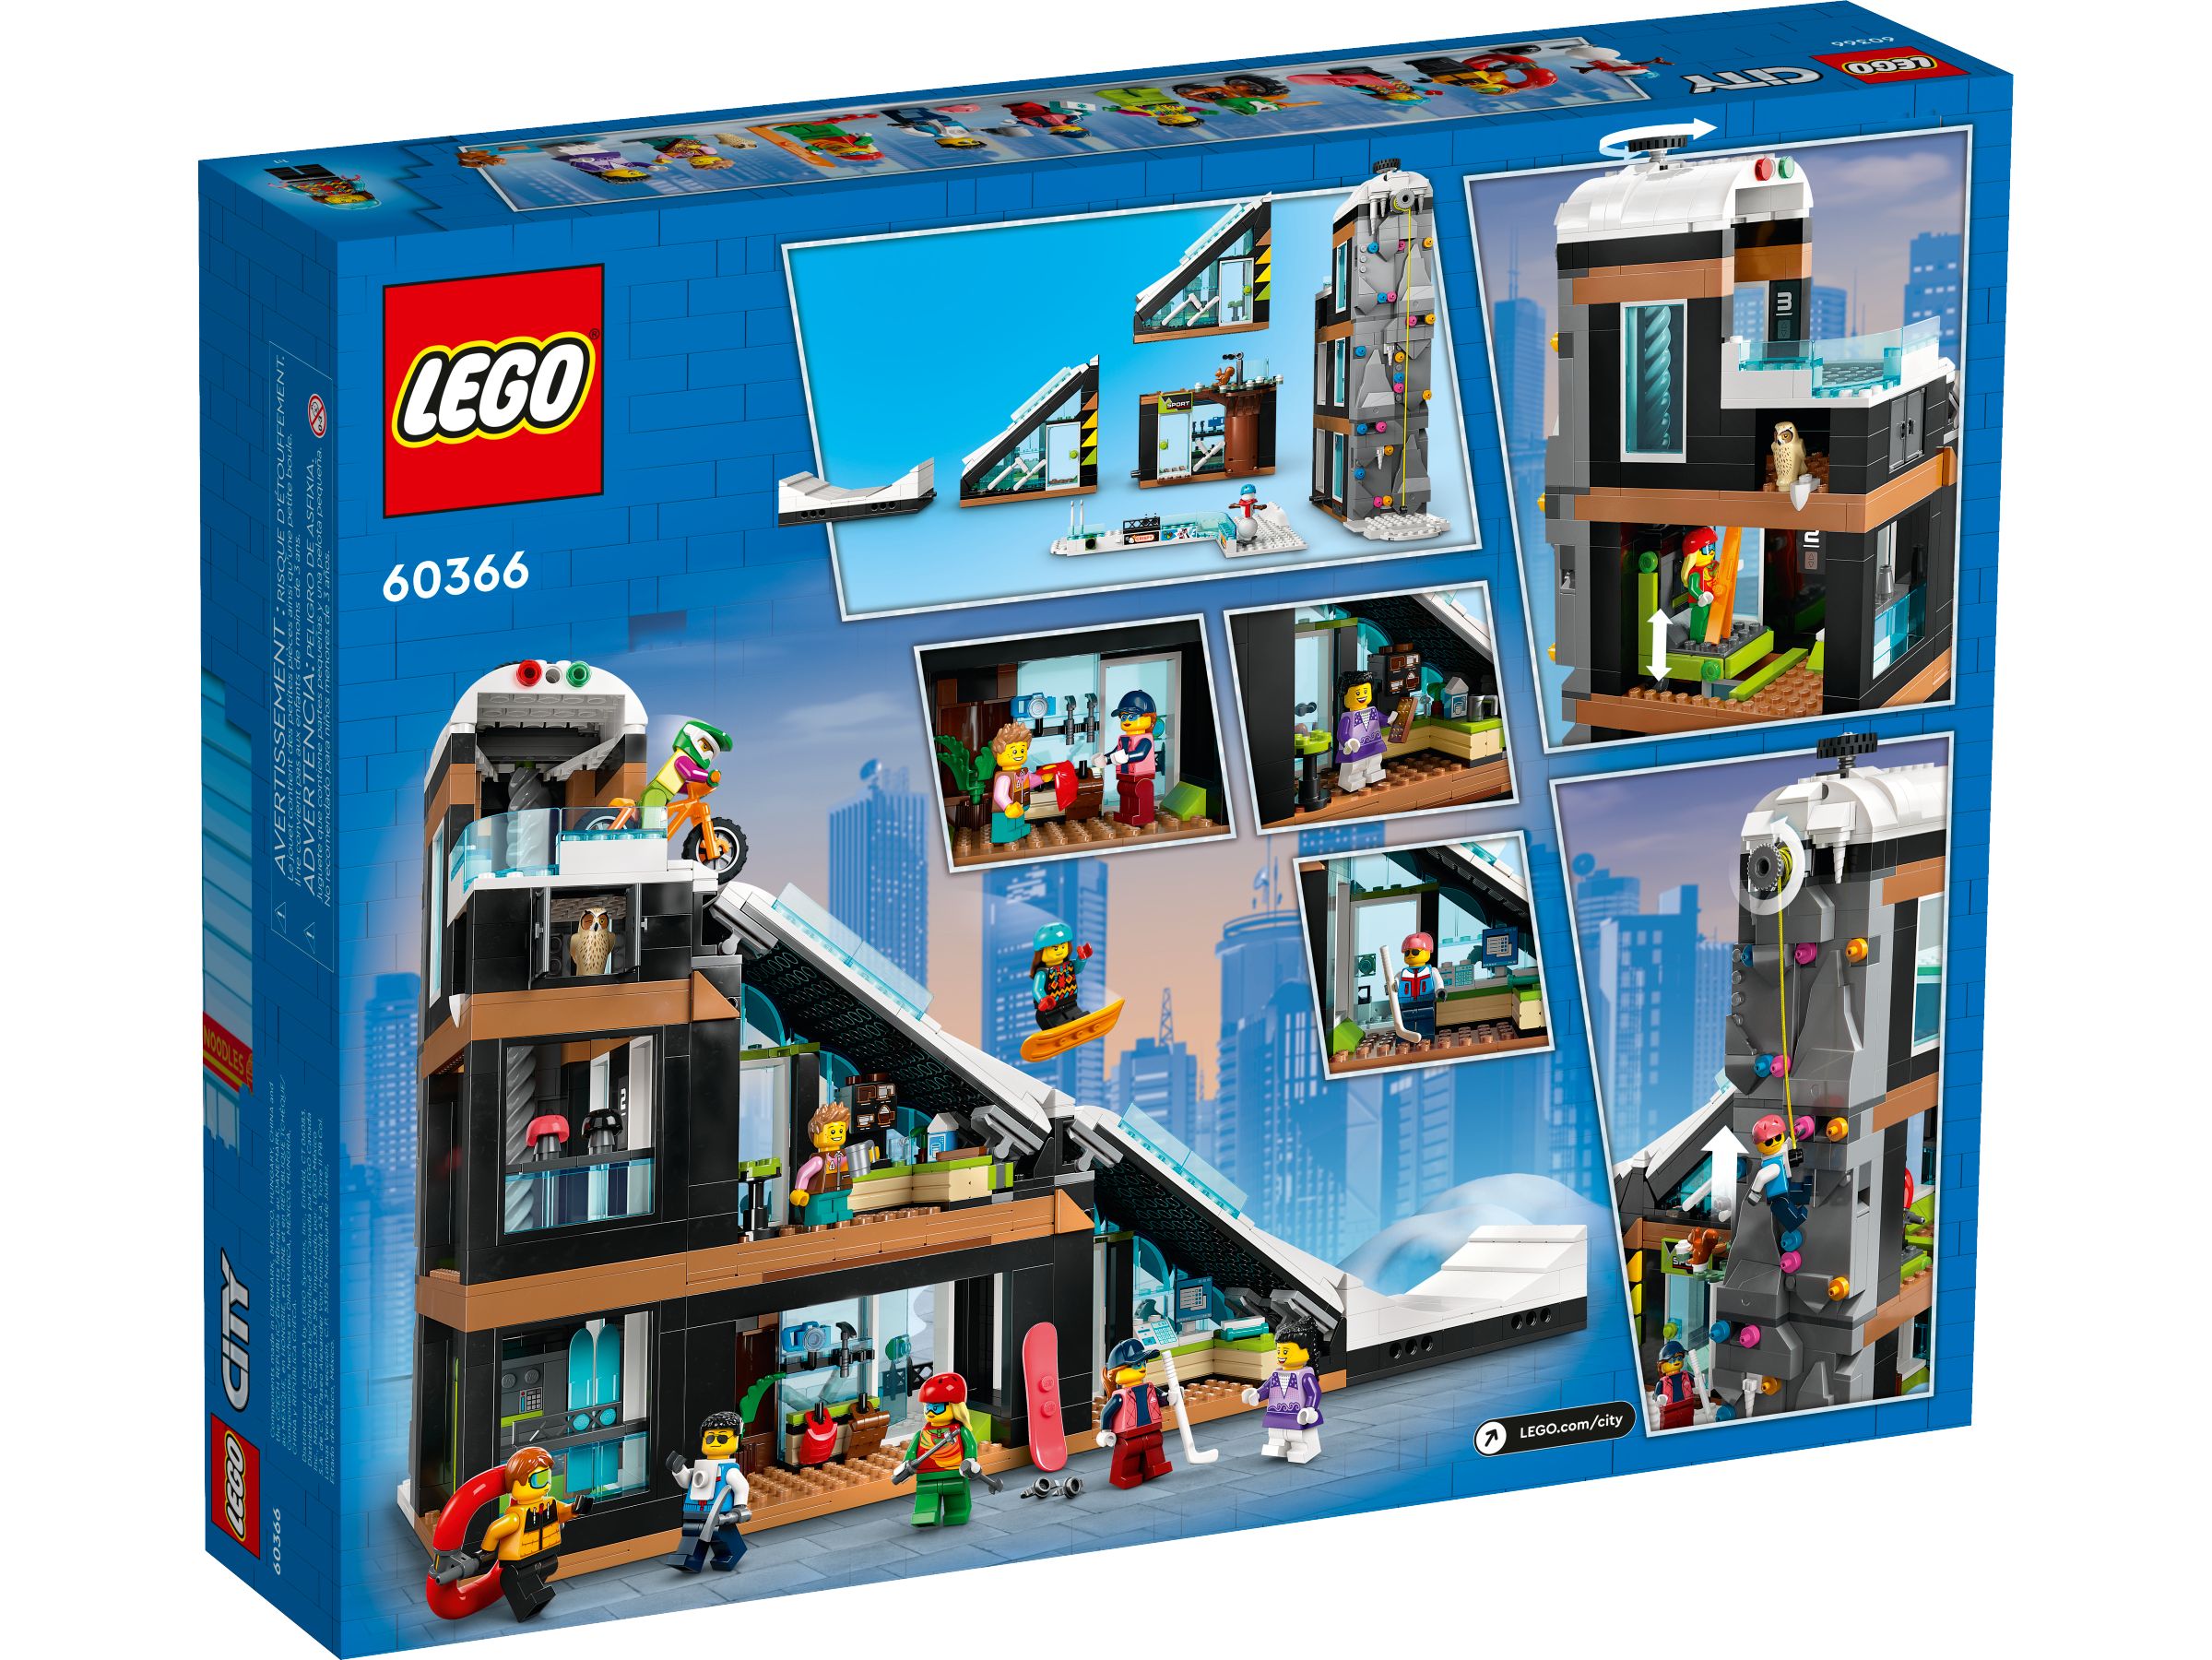 LEGO City 60366 Wintersportpark LEGO_60366_alt9.jpg